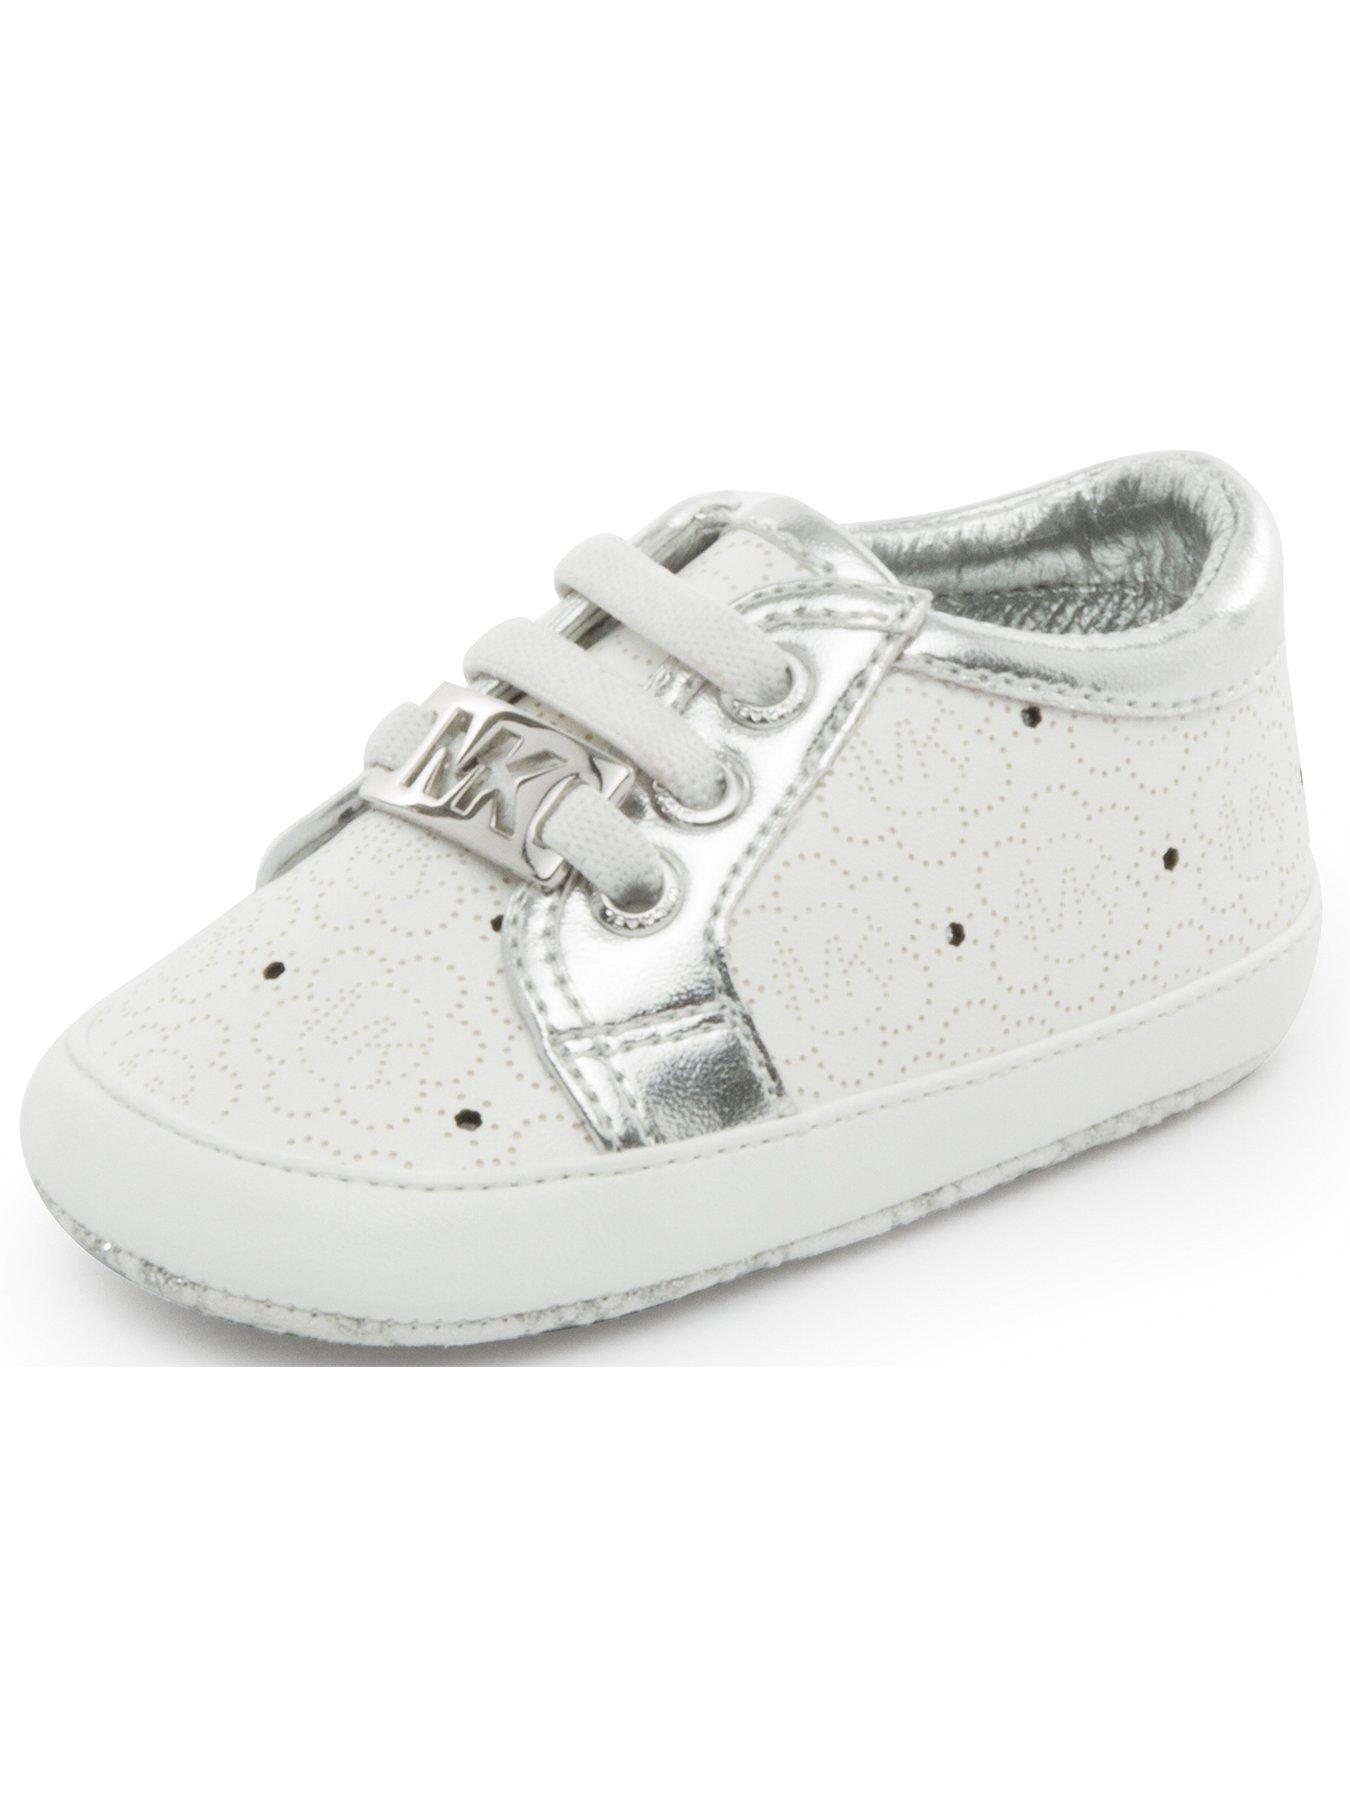 michael kors shoes for baby girl